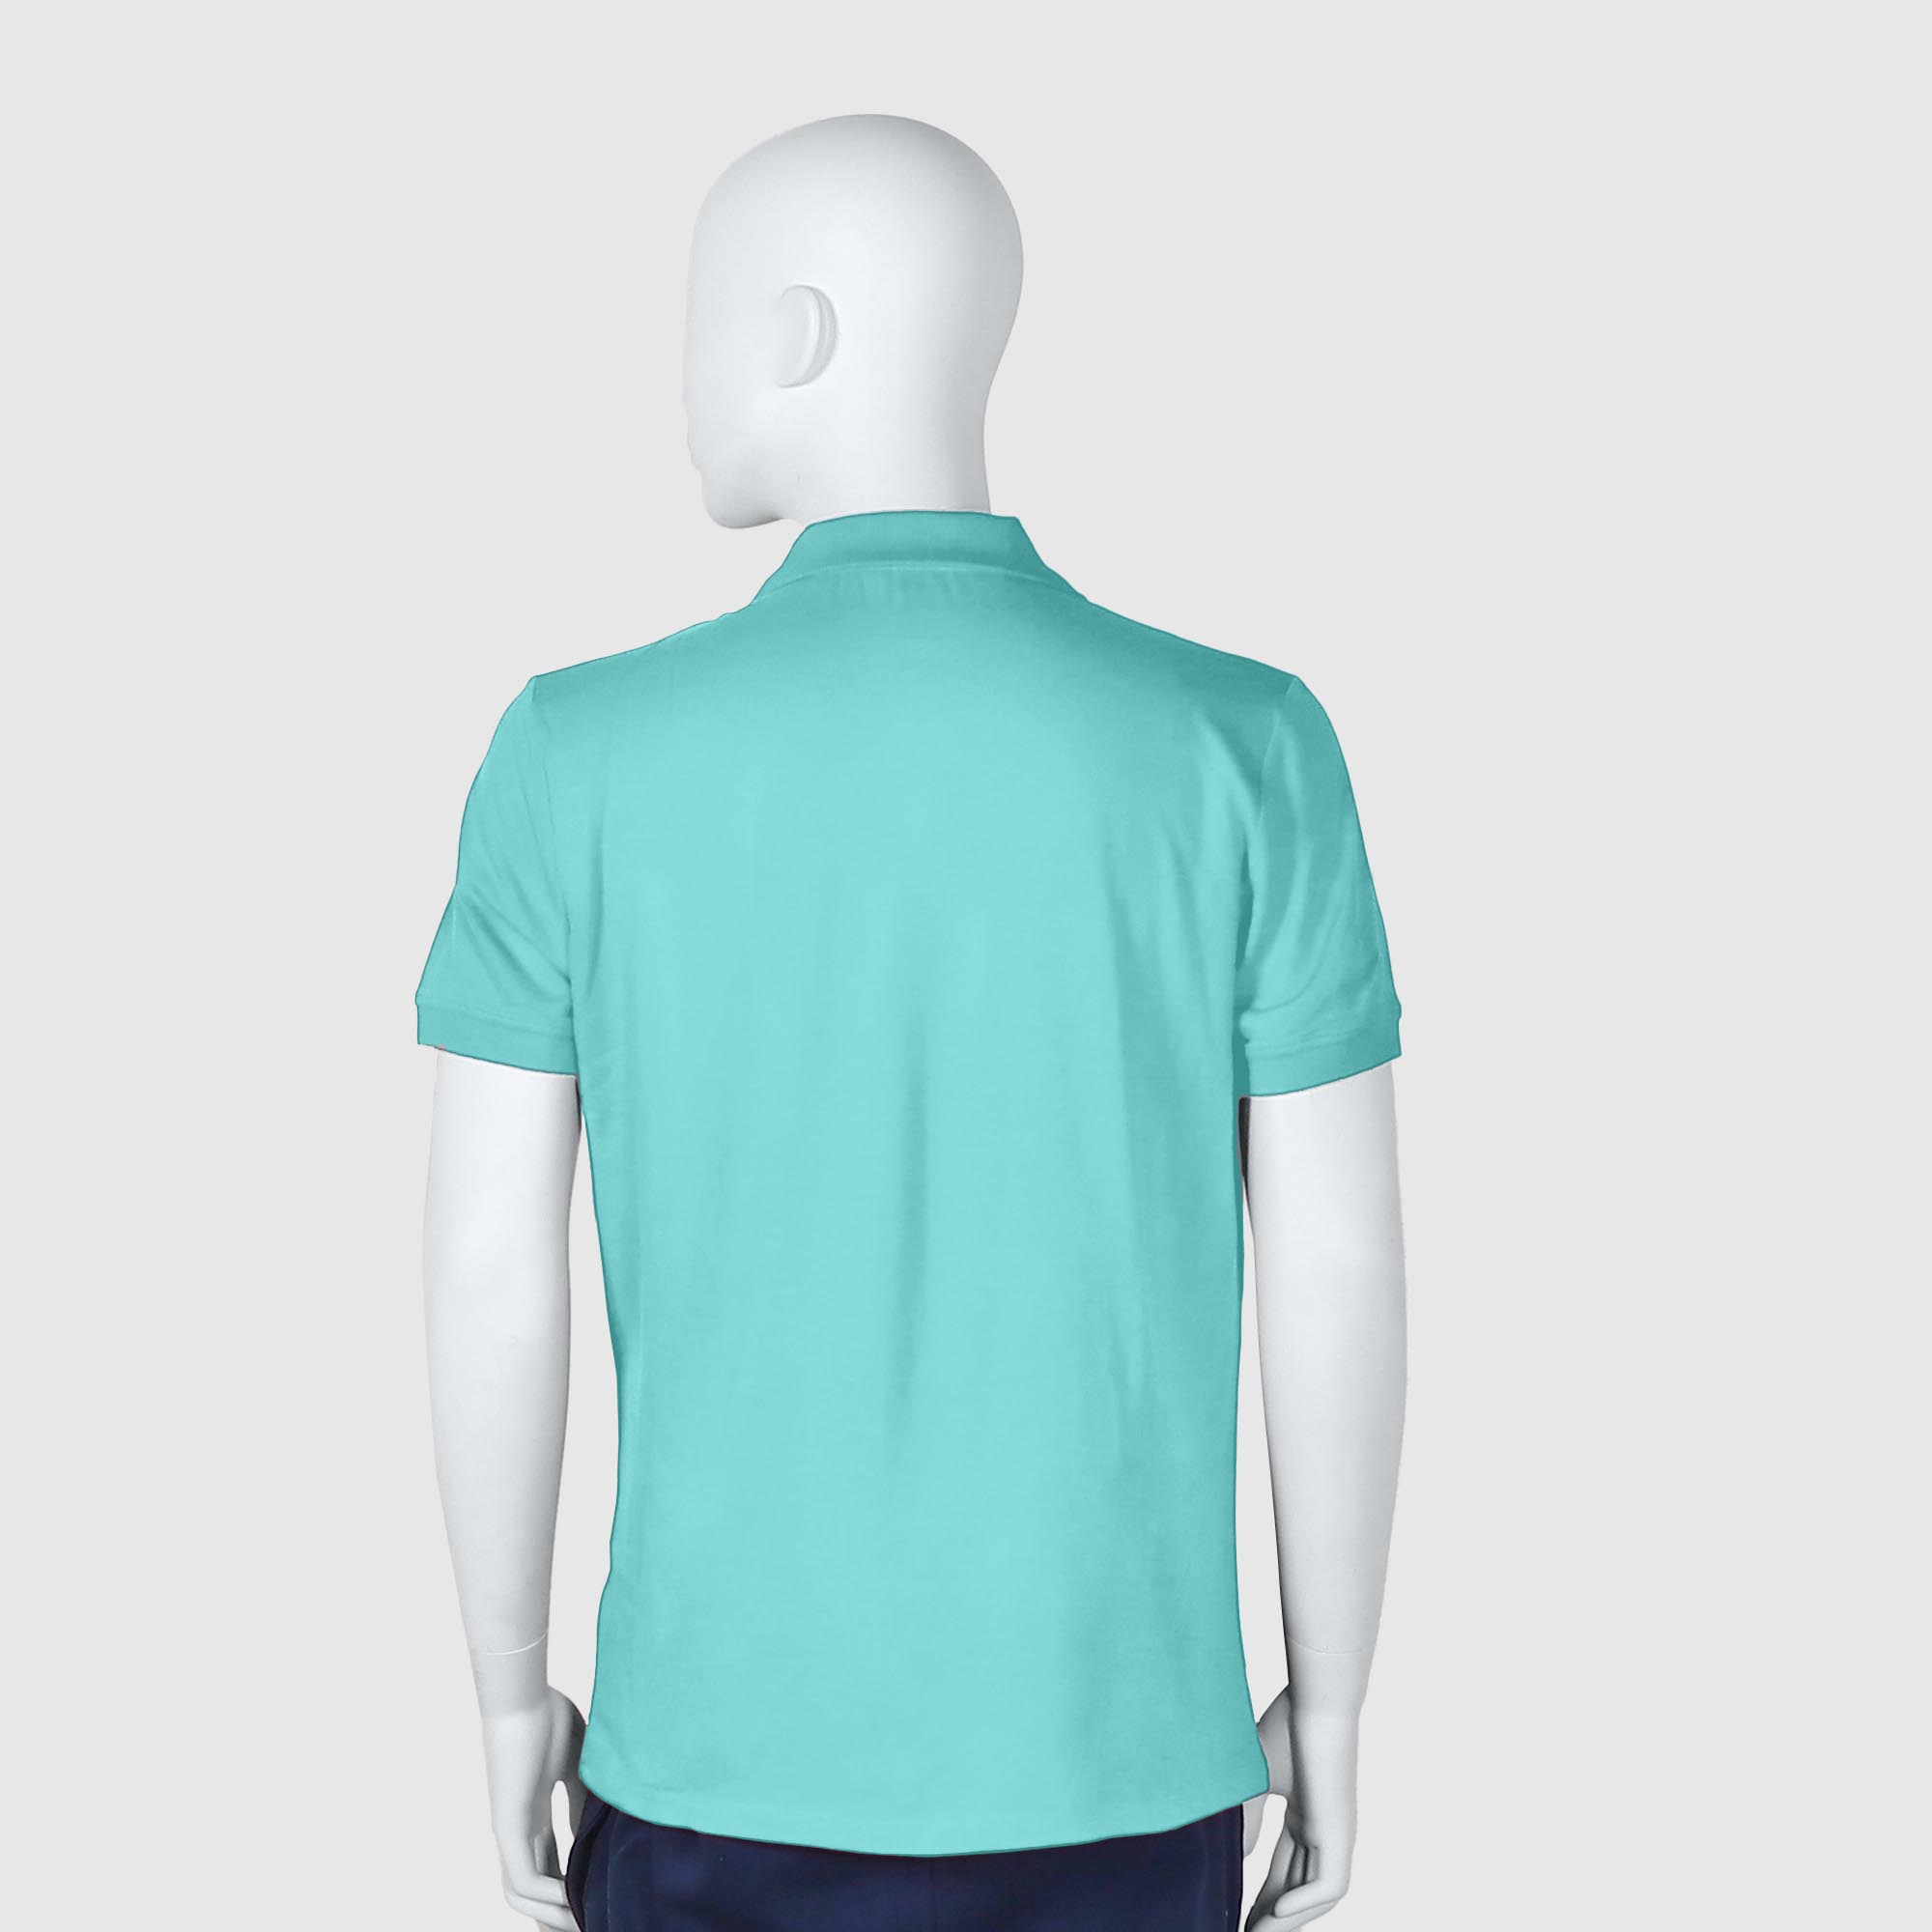 Мужская футболка-поло Diva Teks лазурная (DTD-12), цвет лазурный, размер 46-48 - фото 2